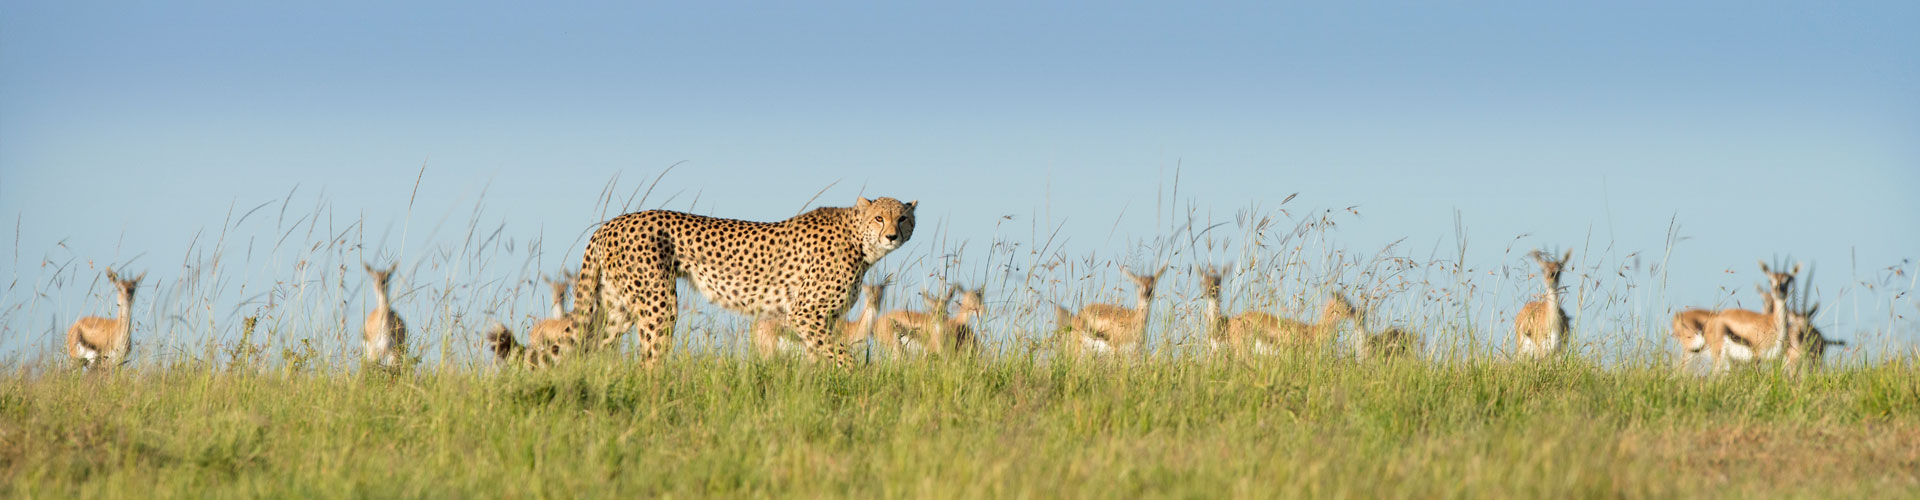 A cheetah prowls against a backdrop of gazelles